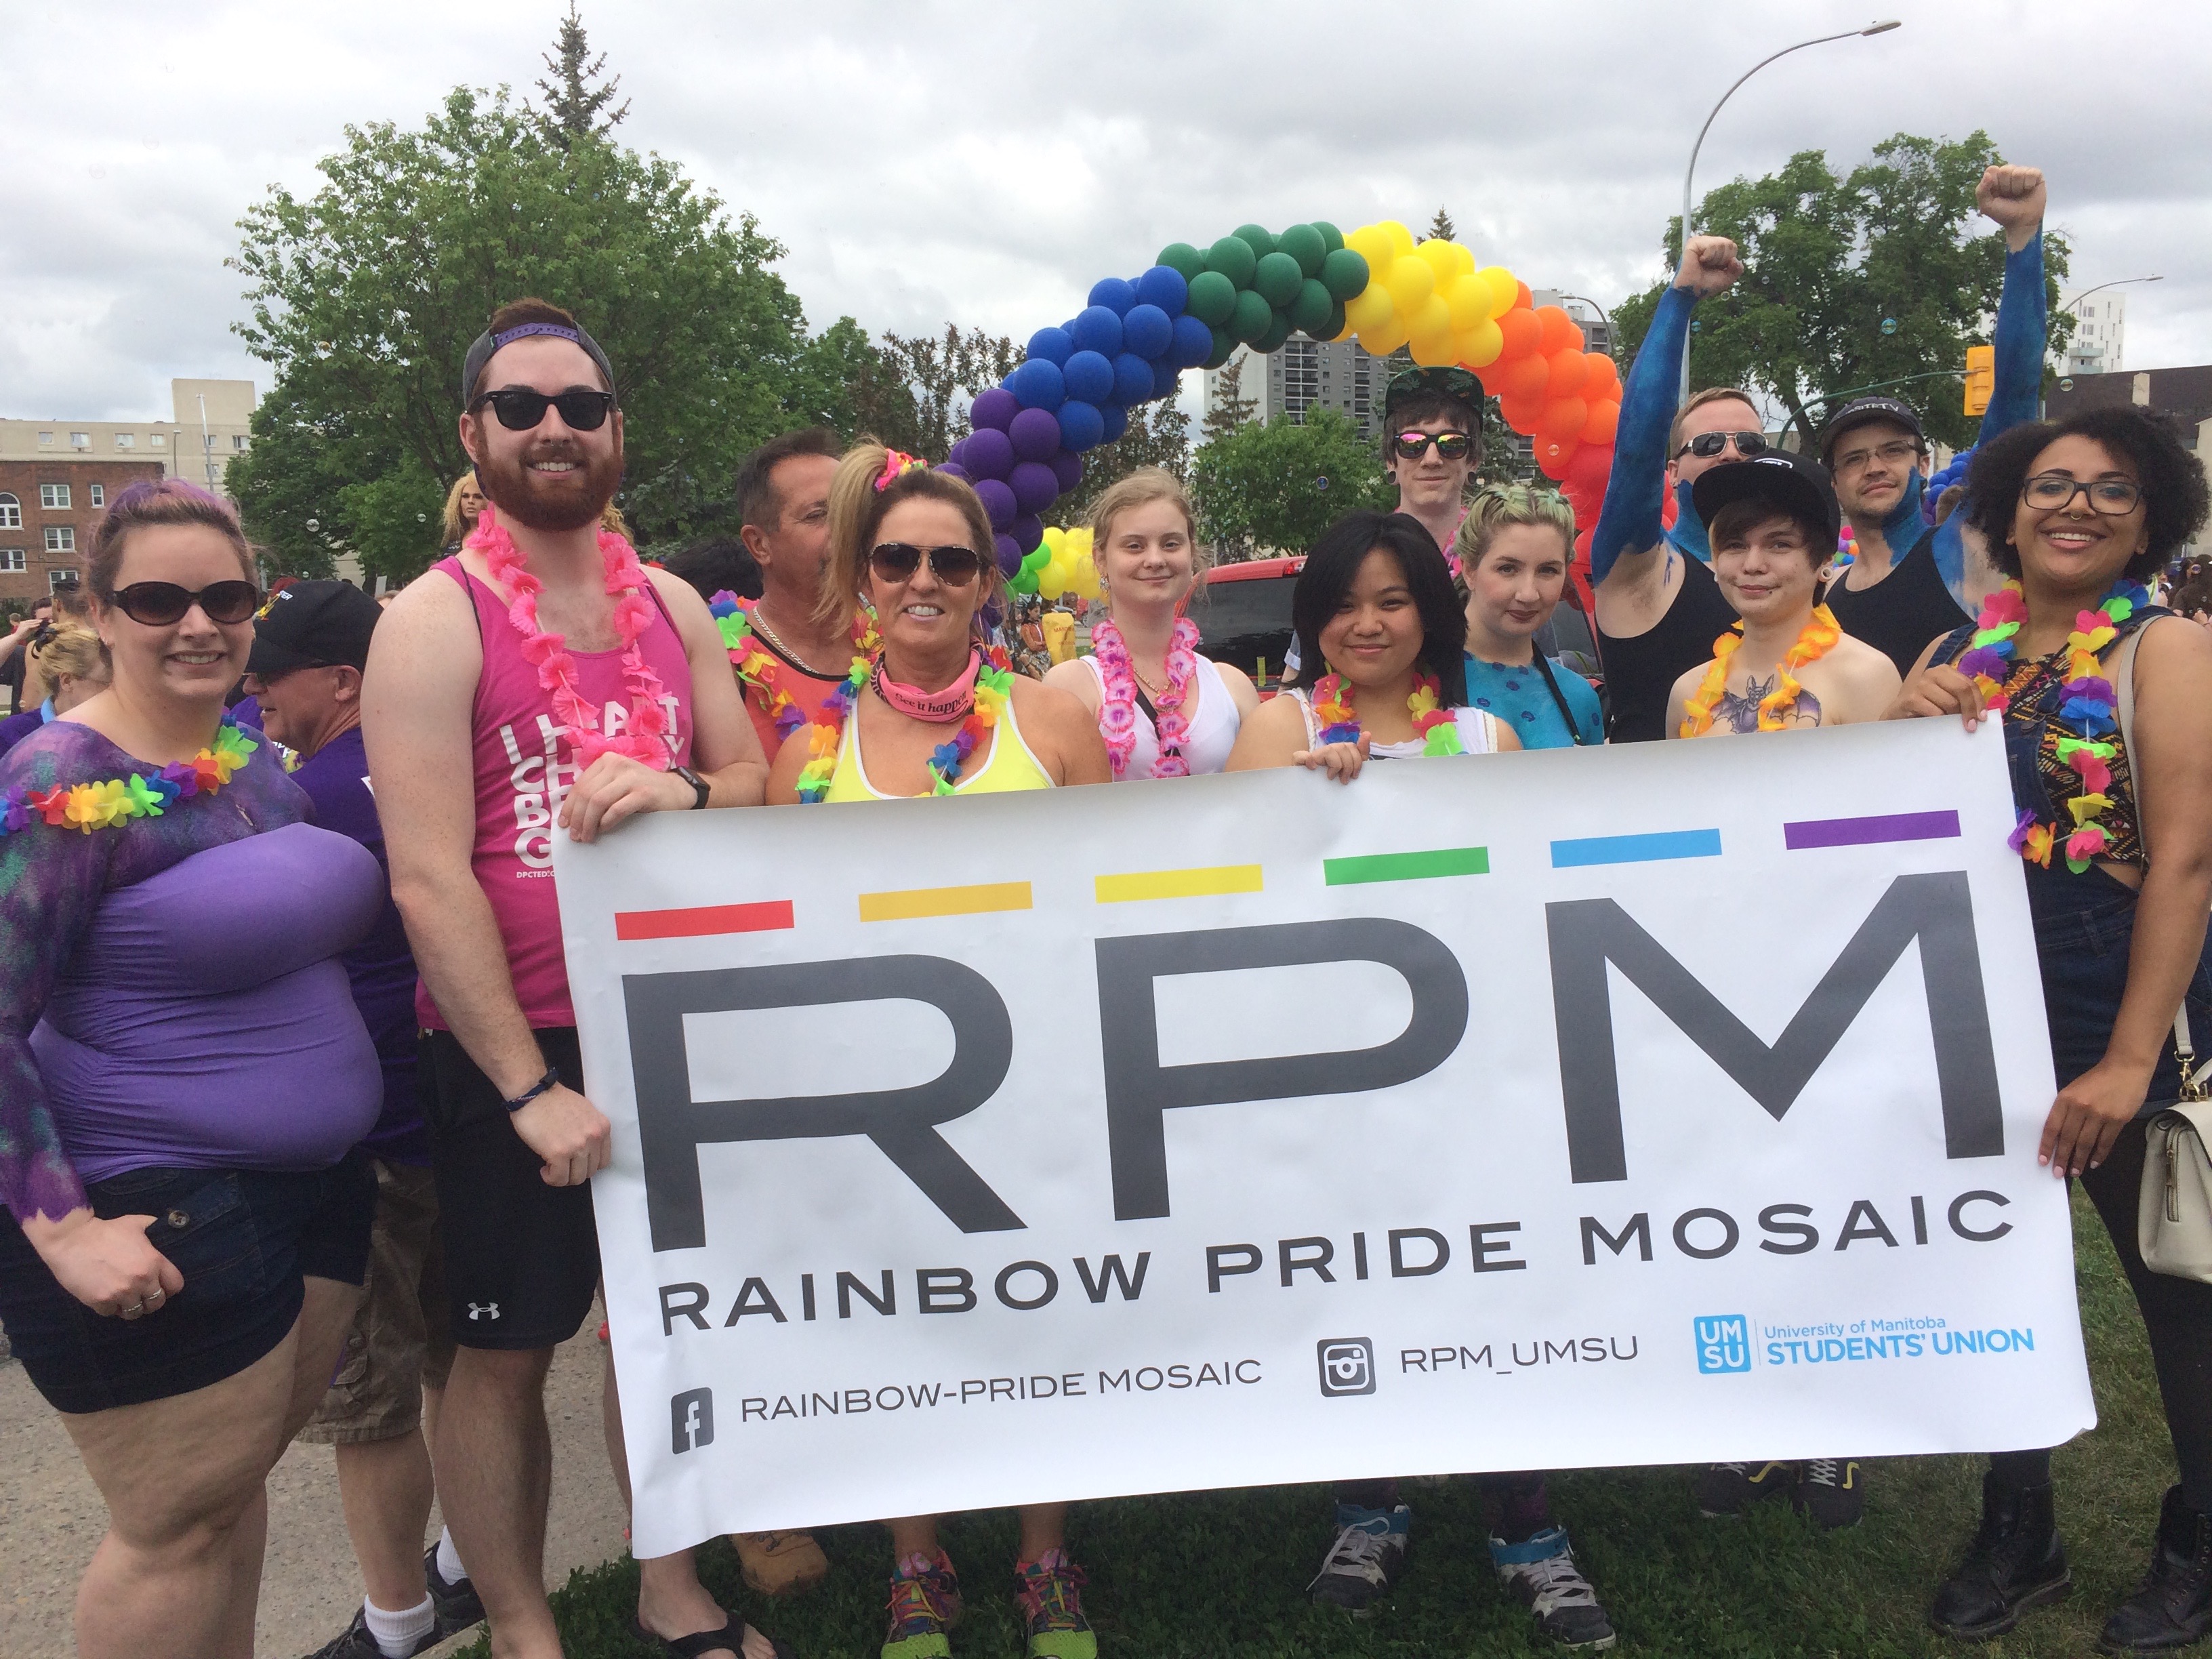 U of M Rainbow Pride Mosaic at the parade on June 4.